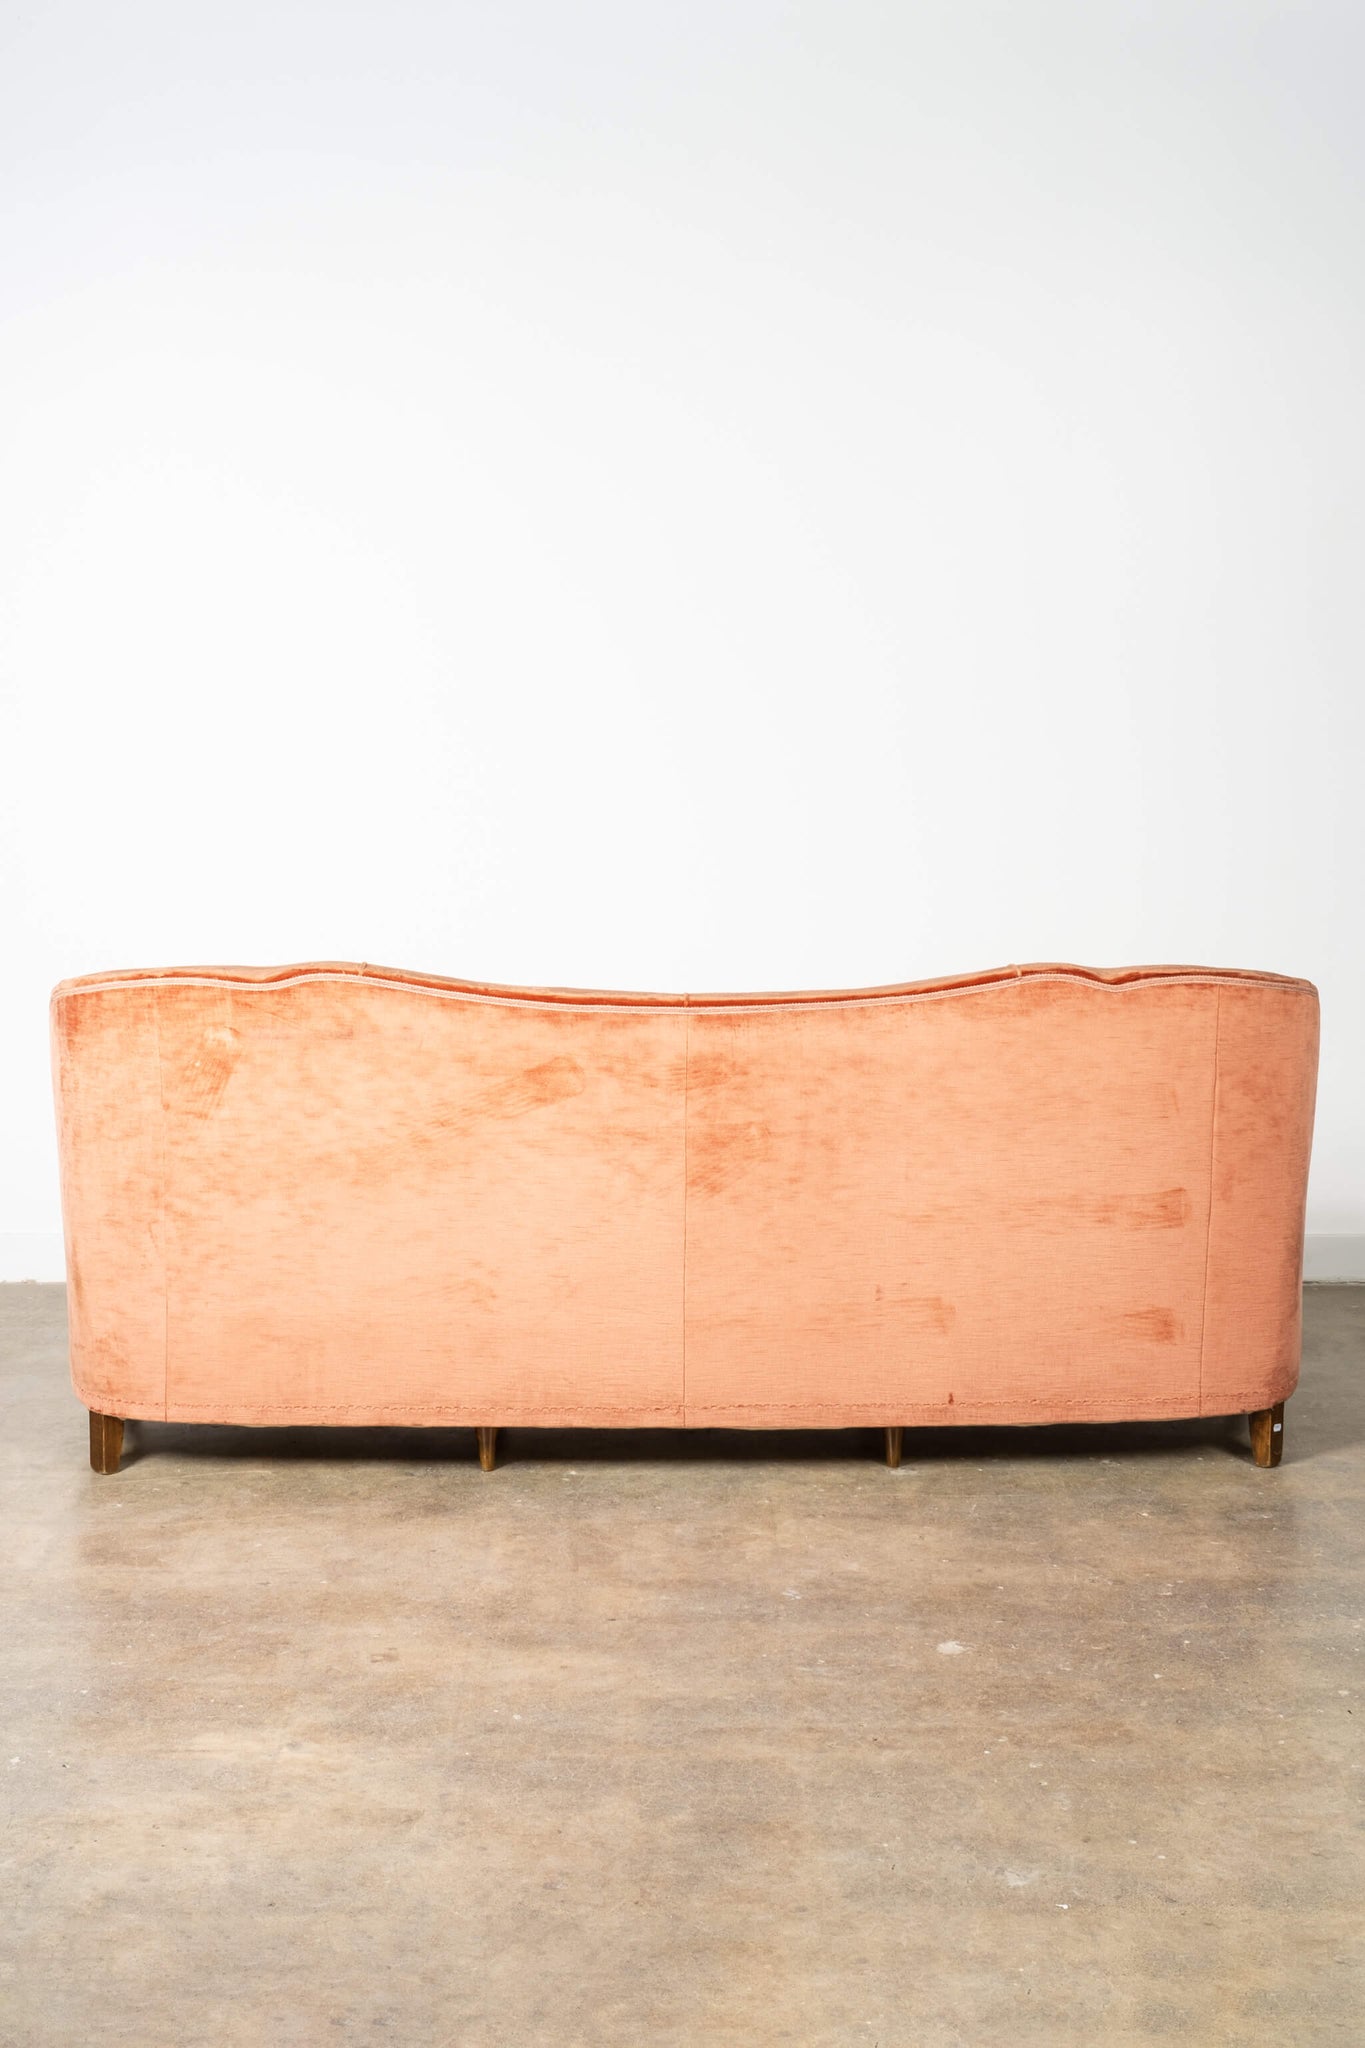 Extremely Rare Vintage Pink Orange Sofa with Curved Frame Detail Casa Giardino Gio Ponti, back view